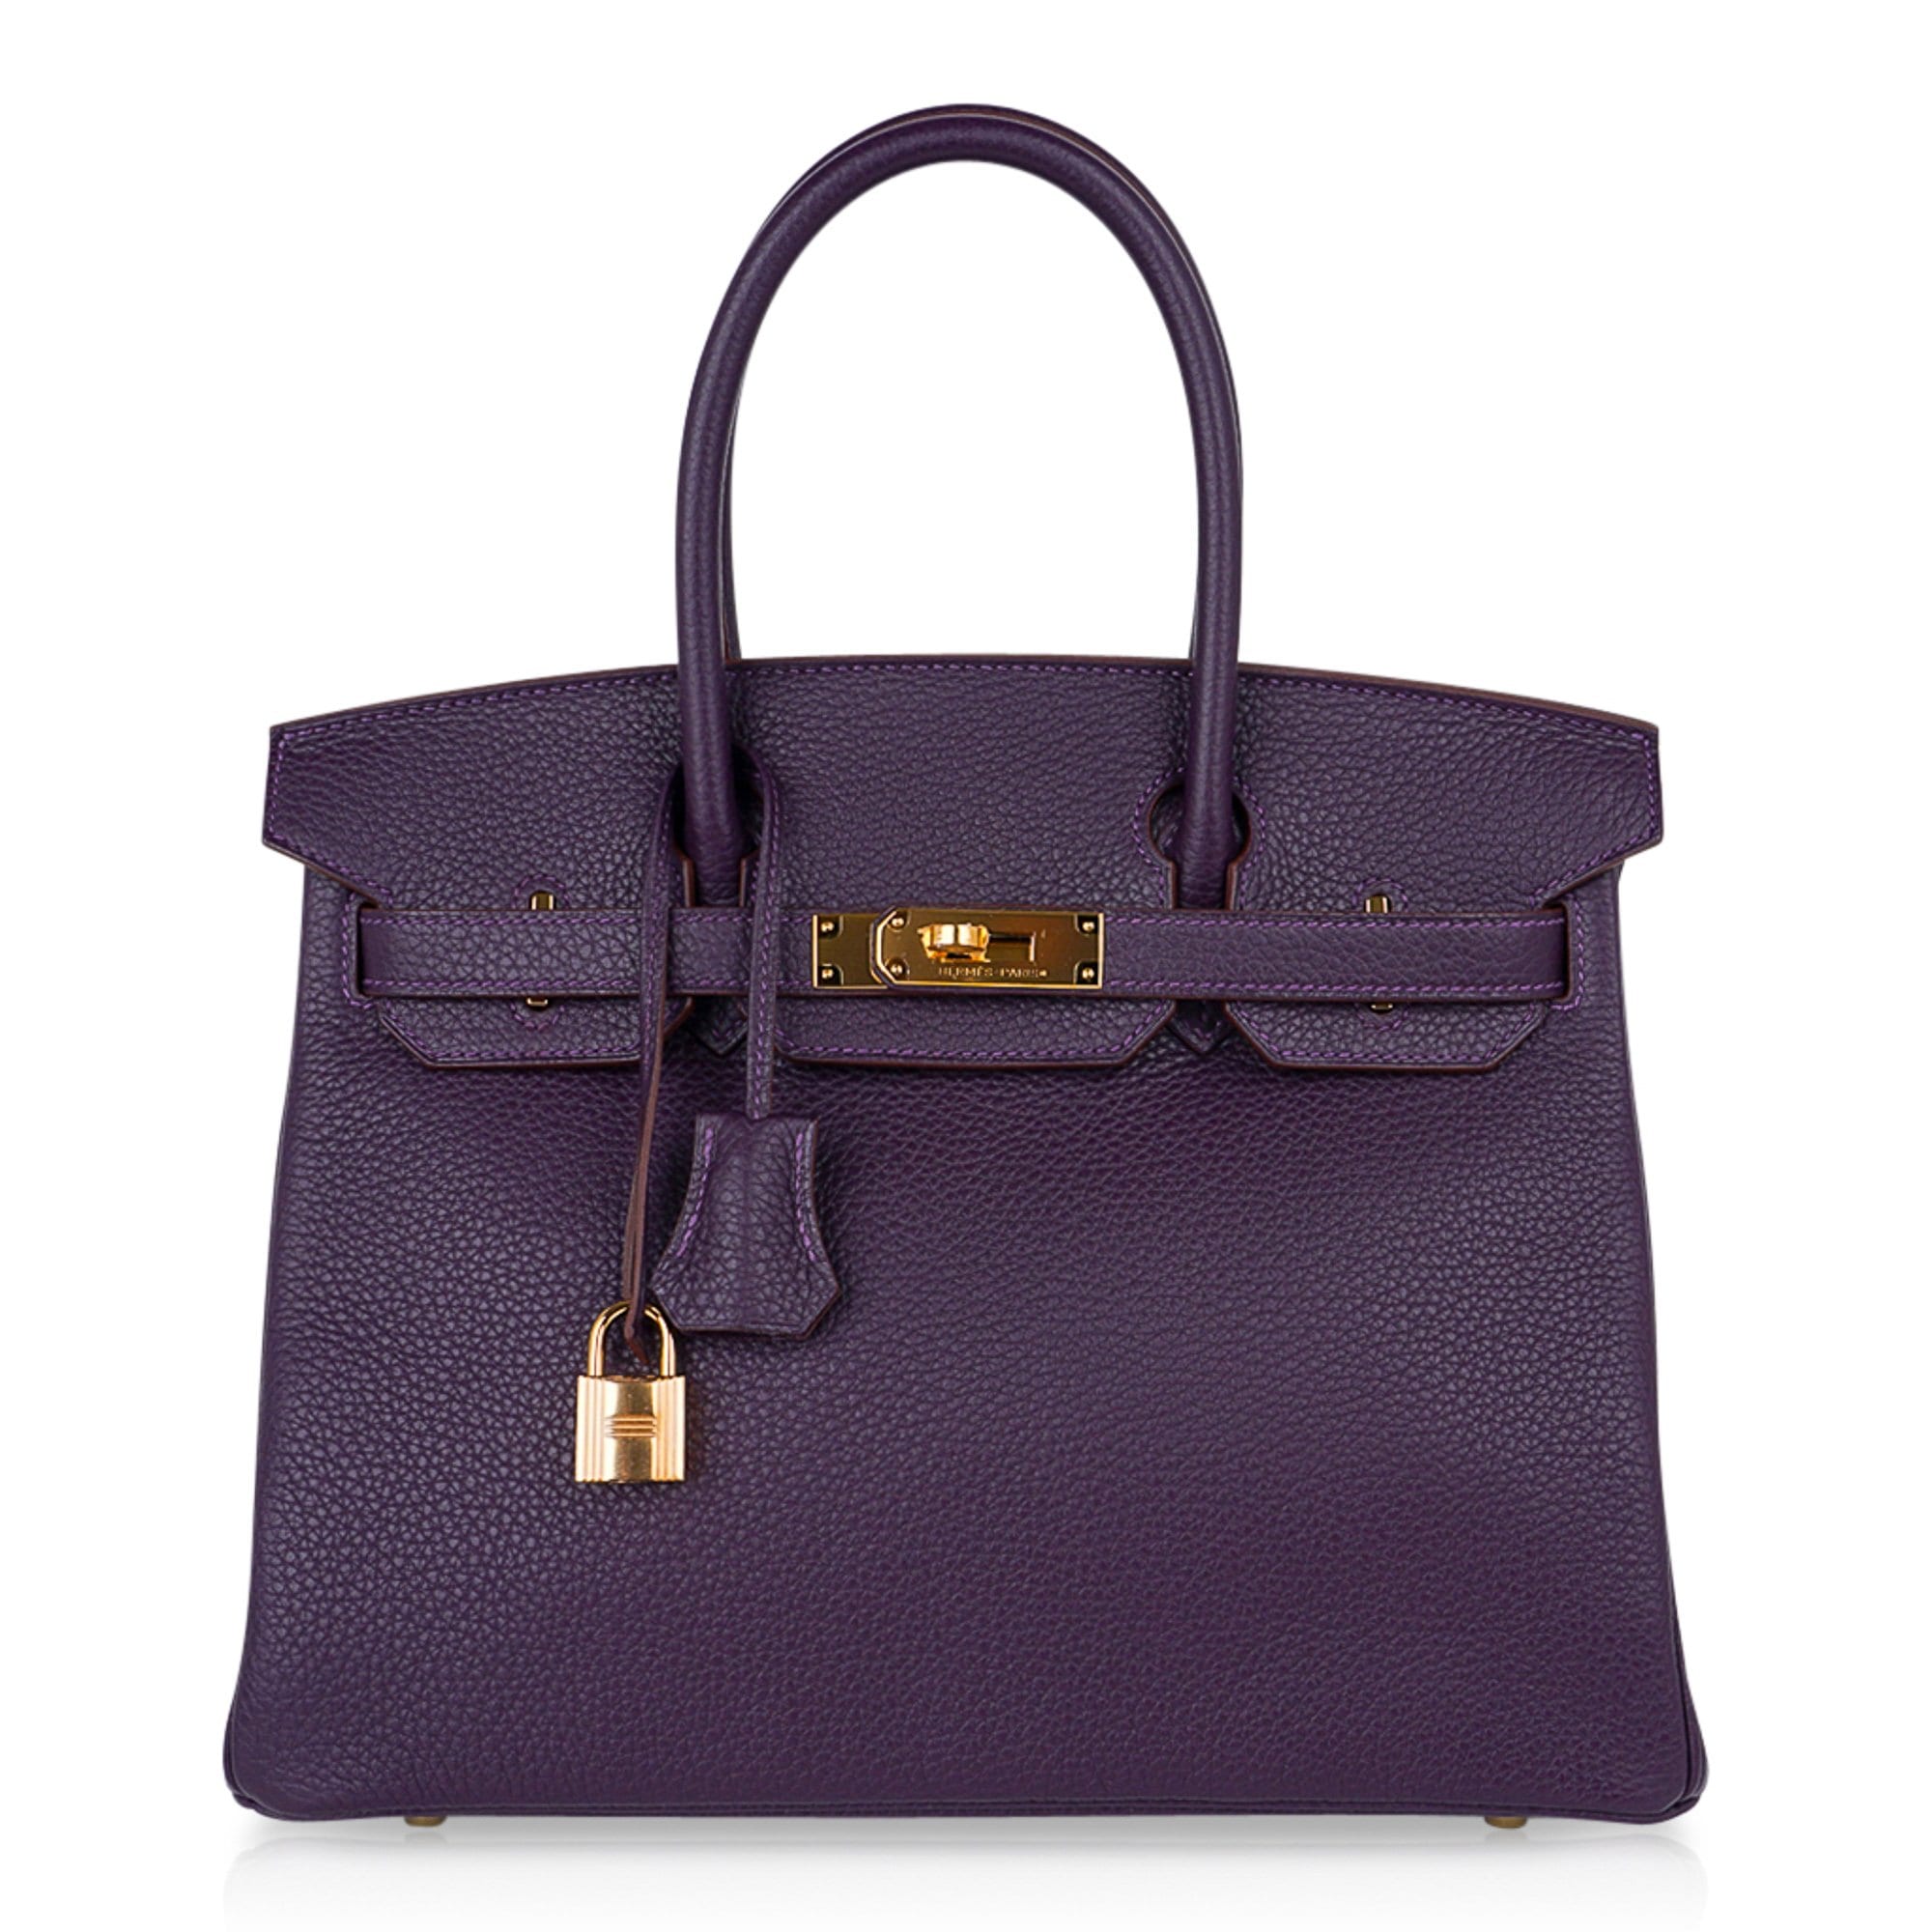 Birkin bag: a purse for the rich